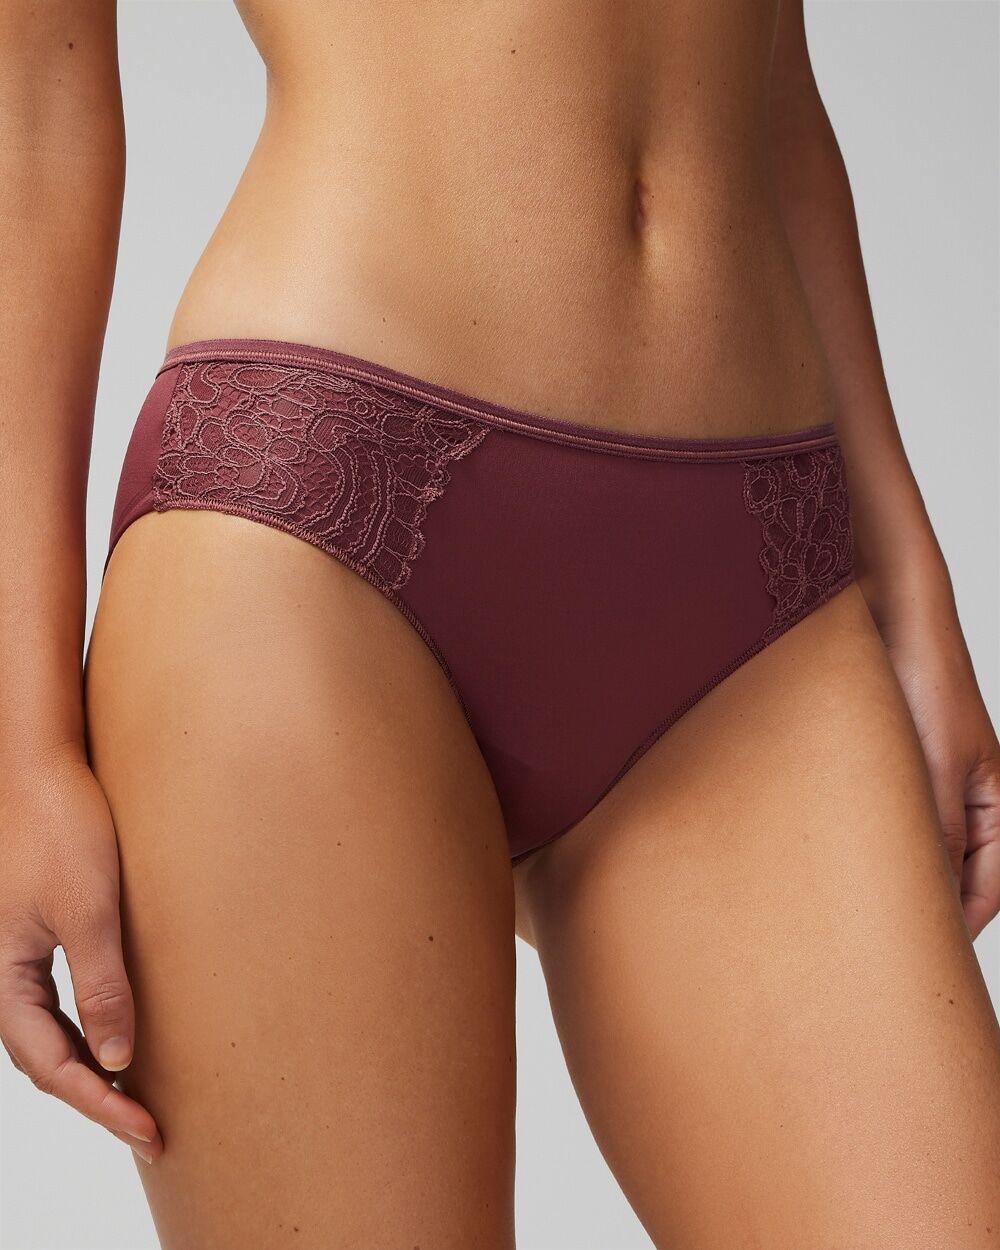 Women's No Show Microfiber Lace Cheeky Underwear in Purple size Medium   Soma Vanishing Edge Panties, Lingerie - Women - Purple - Medium